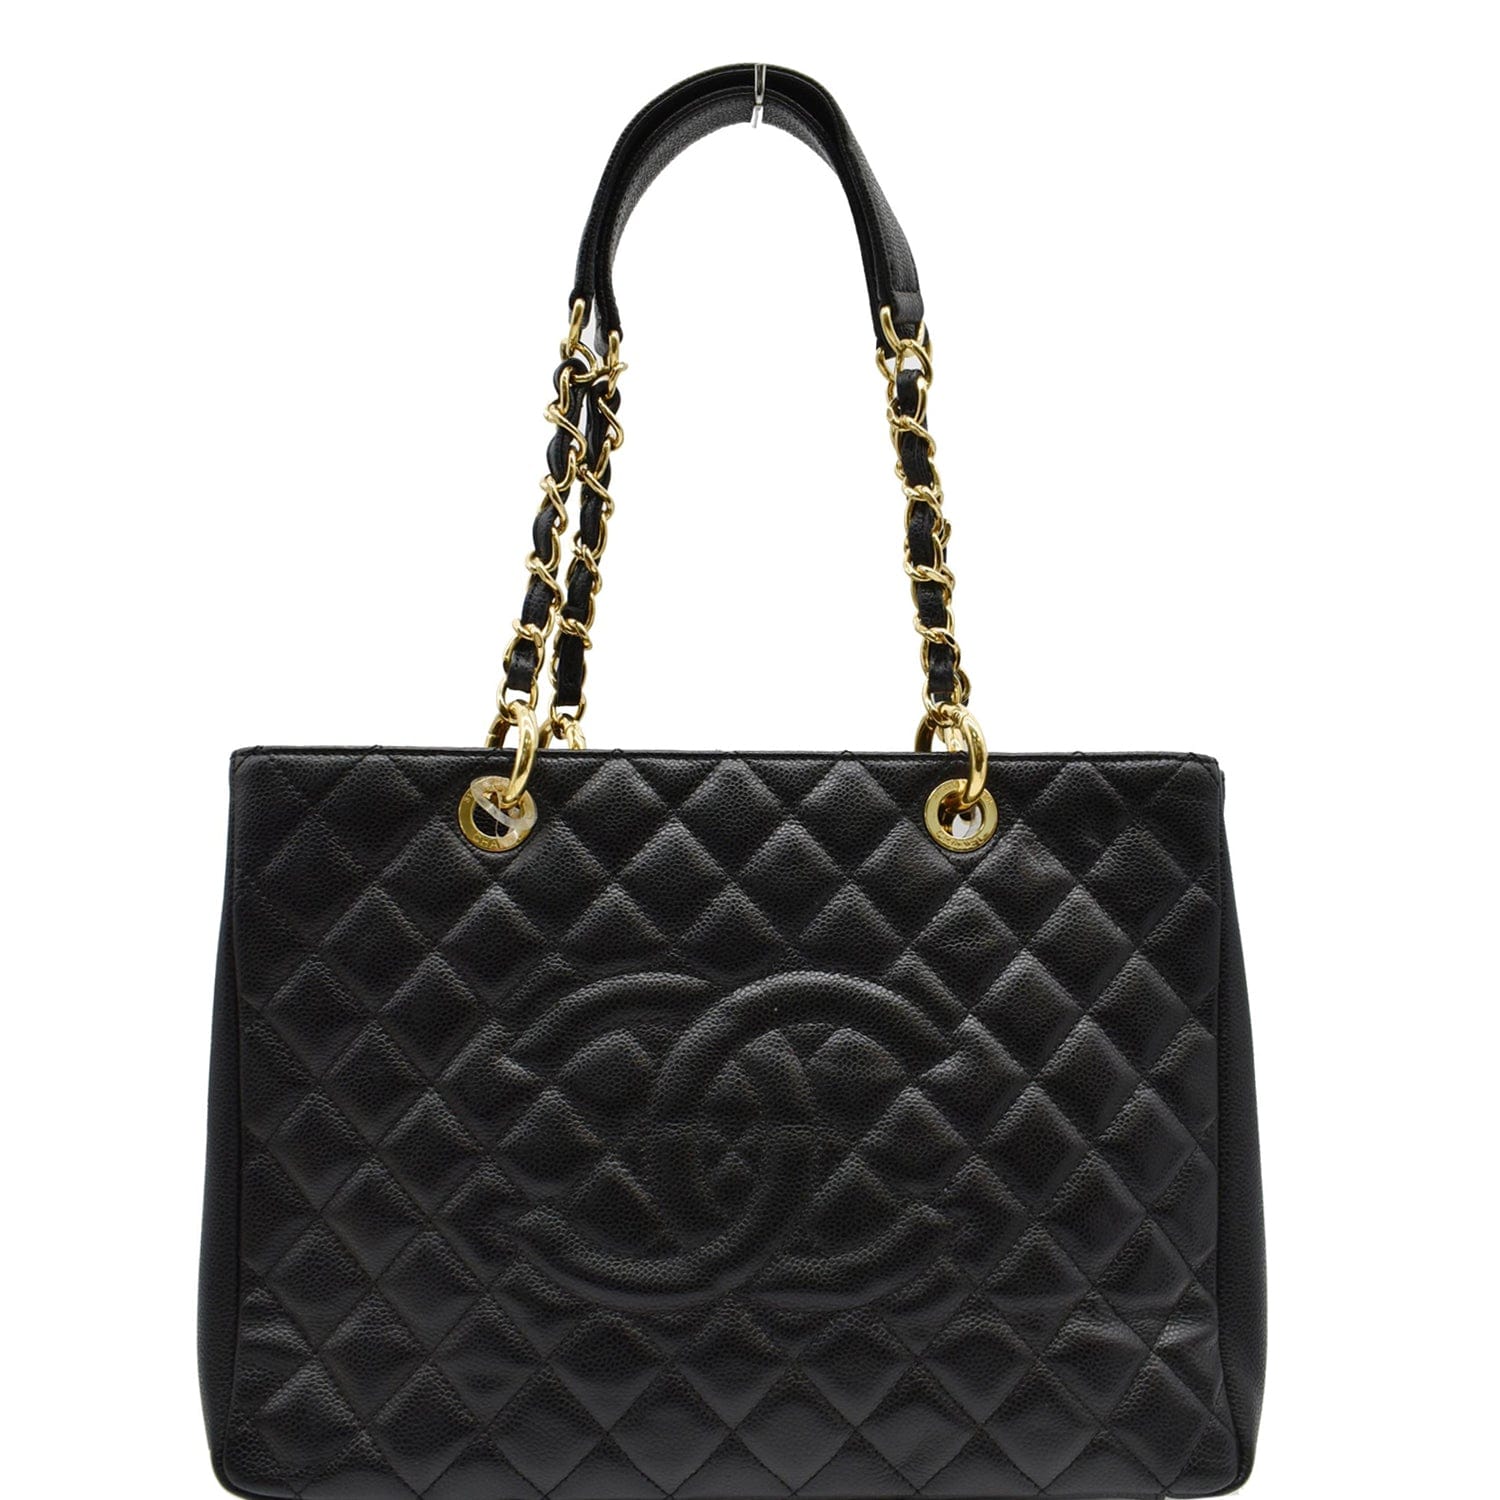 Chanel Grand Shopping GST Caviar Leather Tote Bag Black